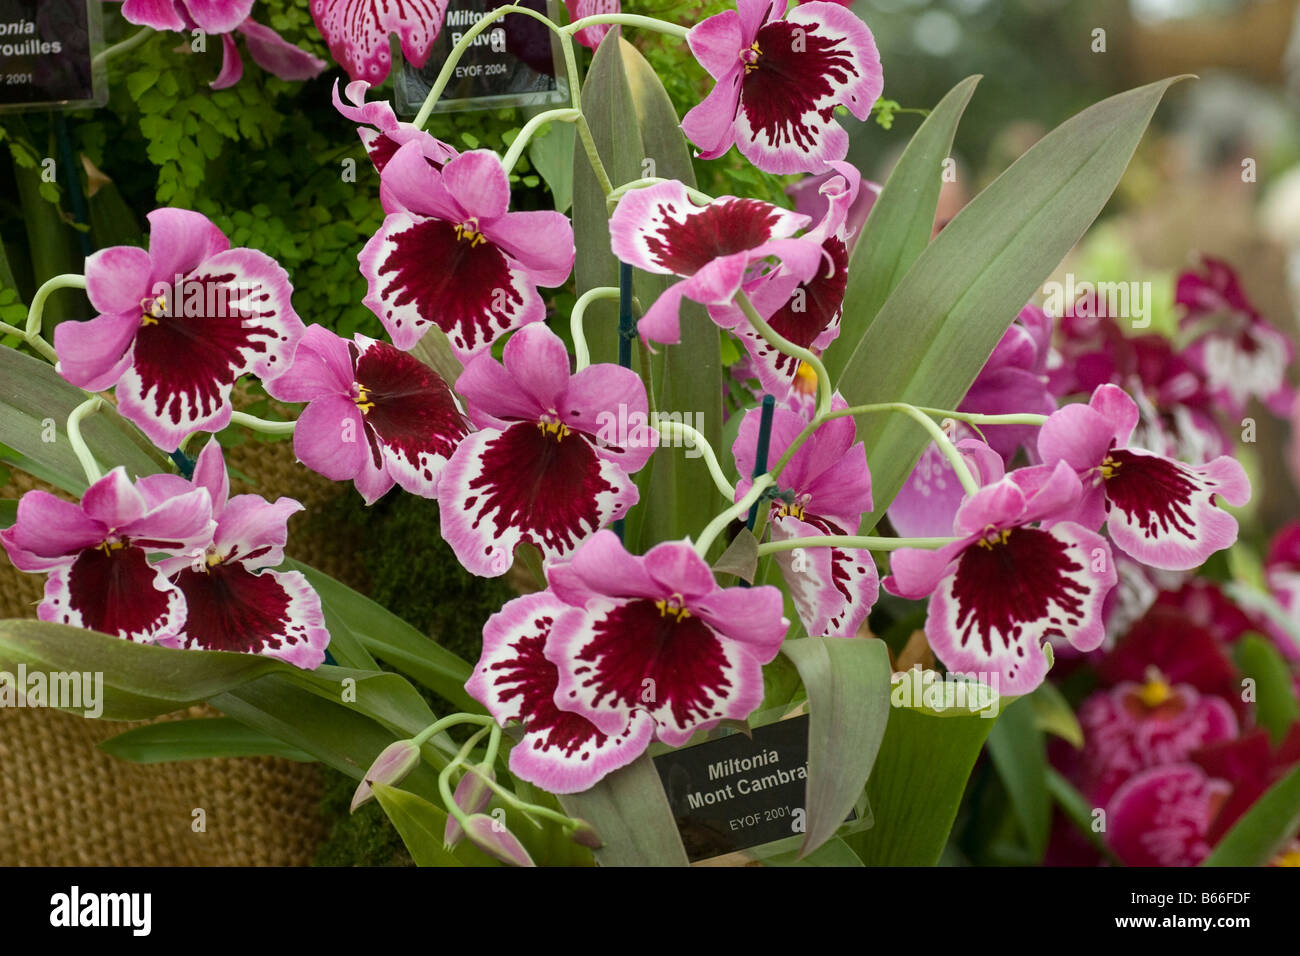 Orchid Mltonia "Mont Cambrai" Stockfoto